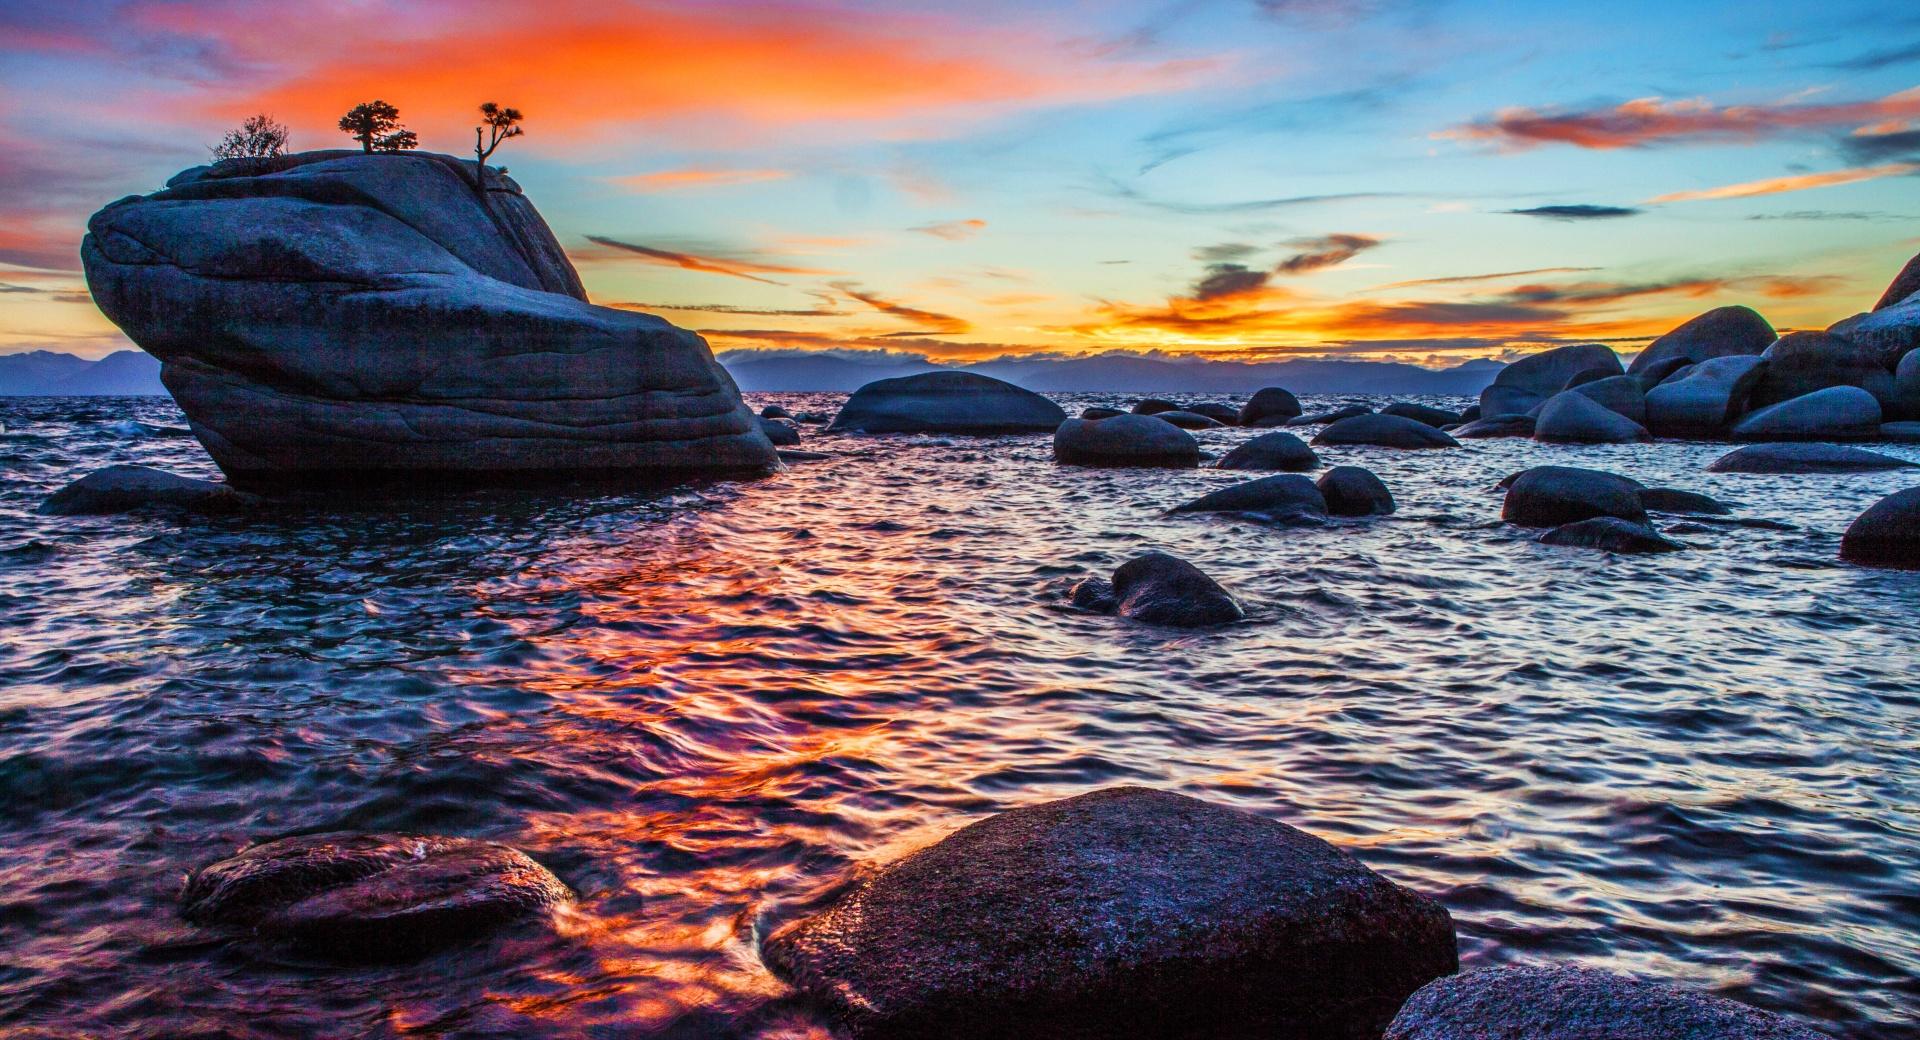 Bonsai Rock Sunset at Lake Tahoe at 1024 x 1024 iPad size wallpapers HD quality